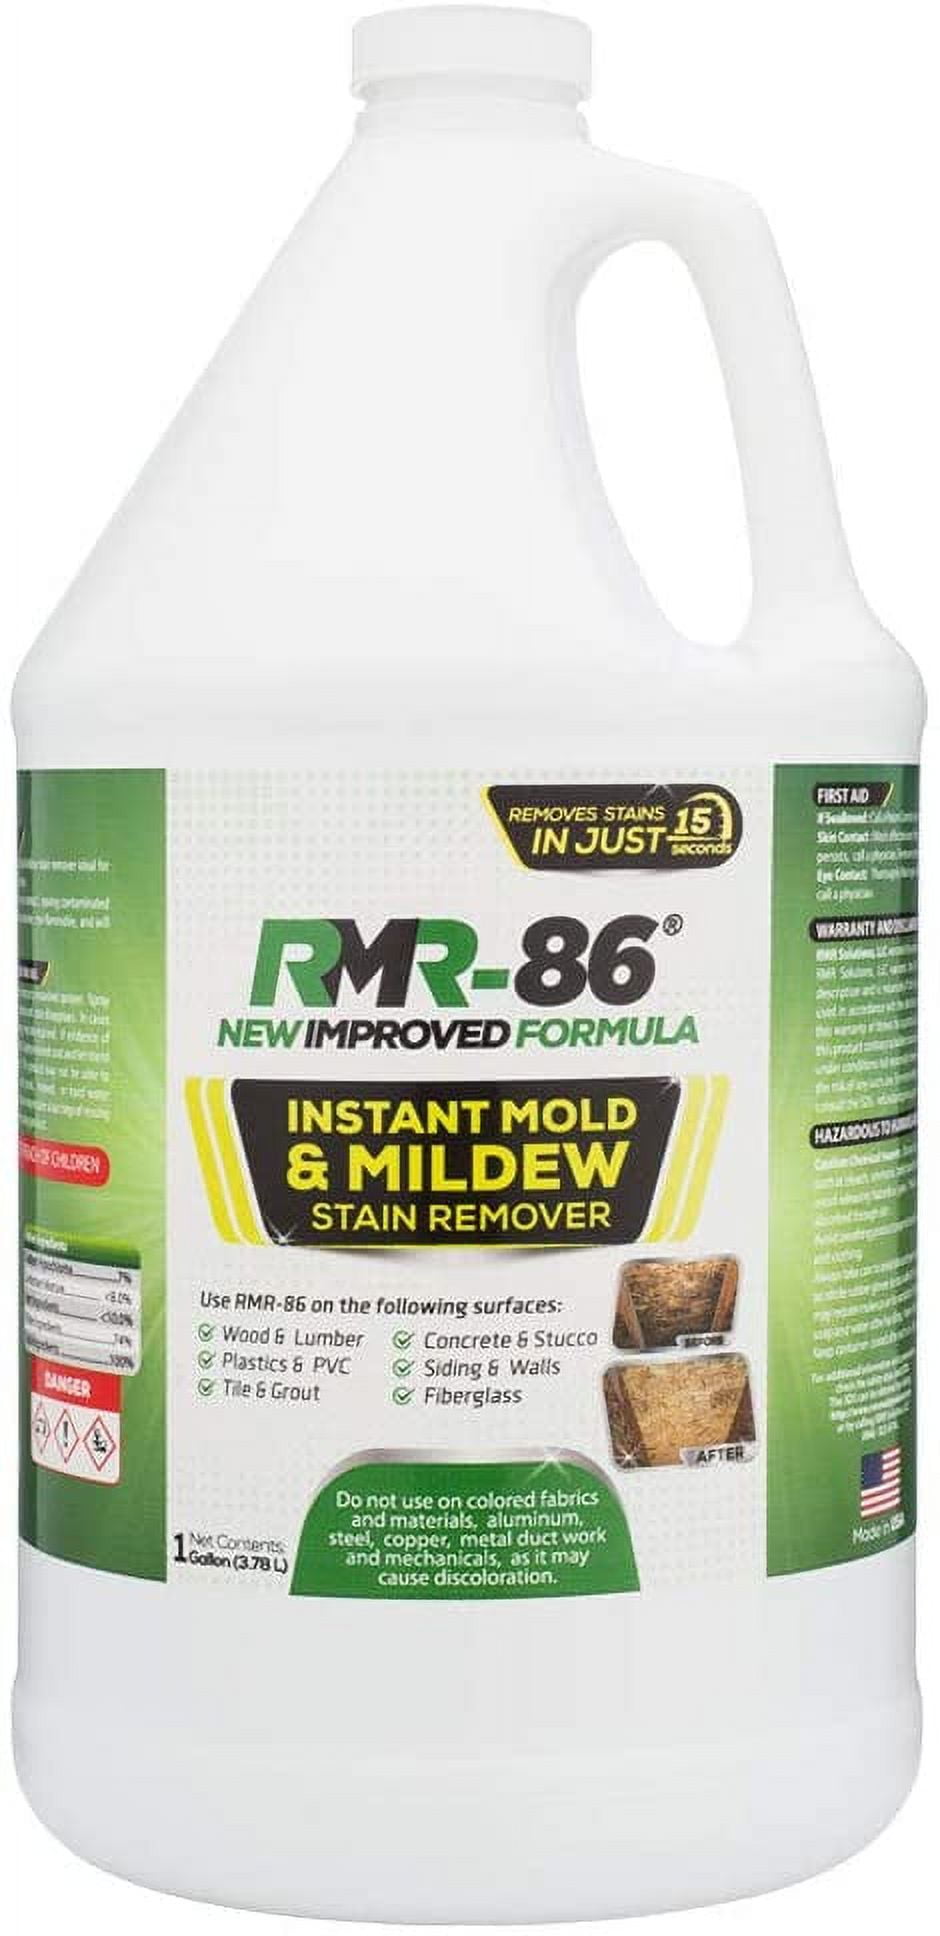 OTTO Anti-Mold Spray 250ml Mold Remover in Living Room, Kitchen, Bathroom,  Basement 4030574017131